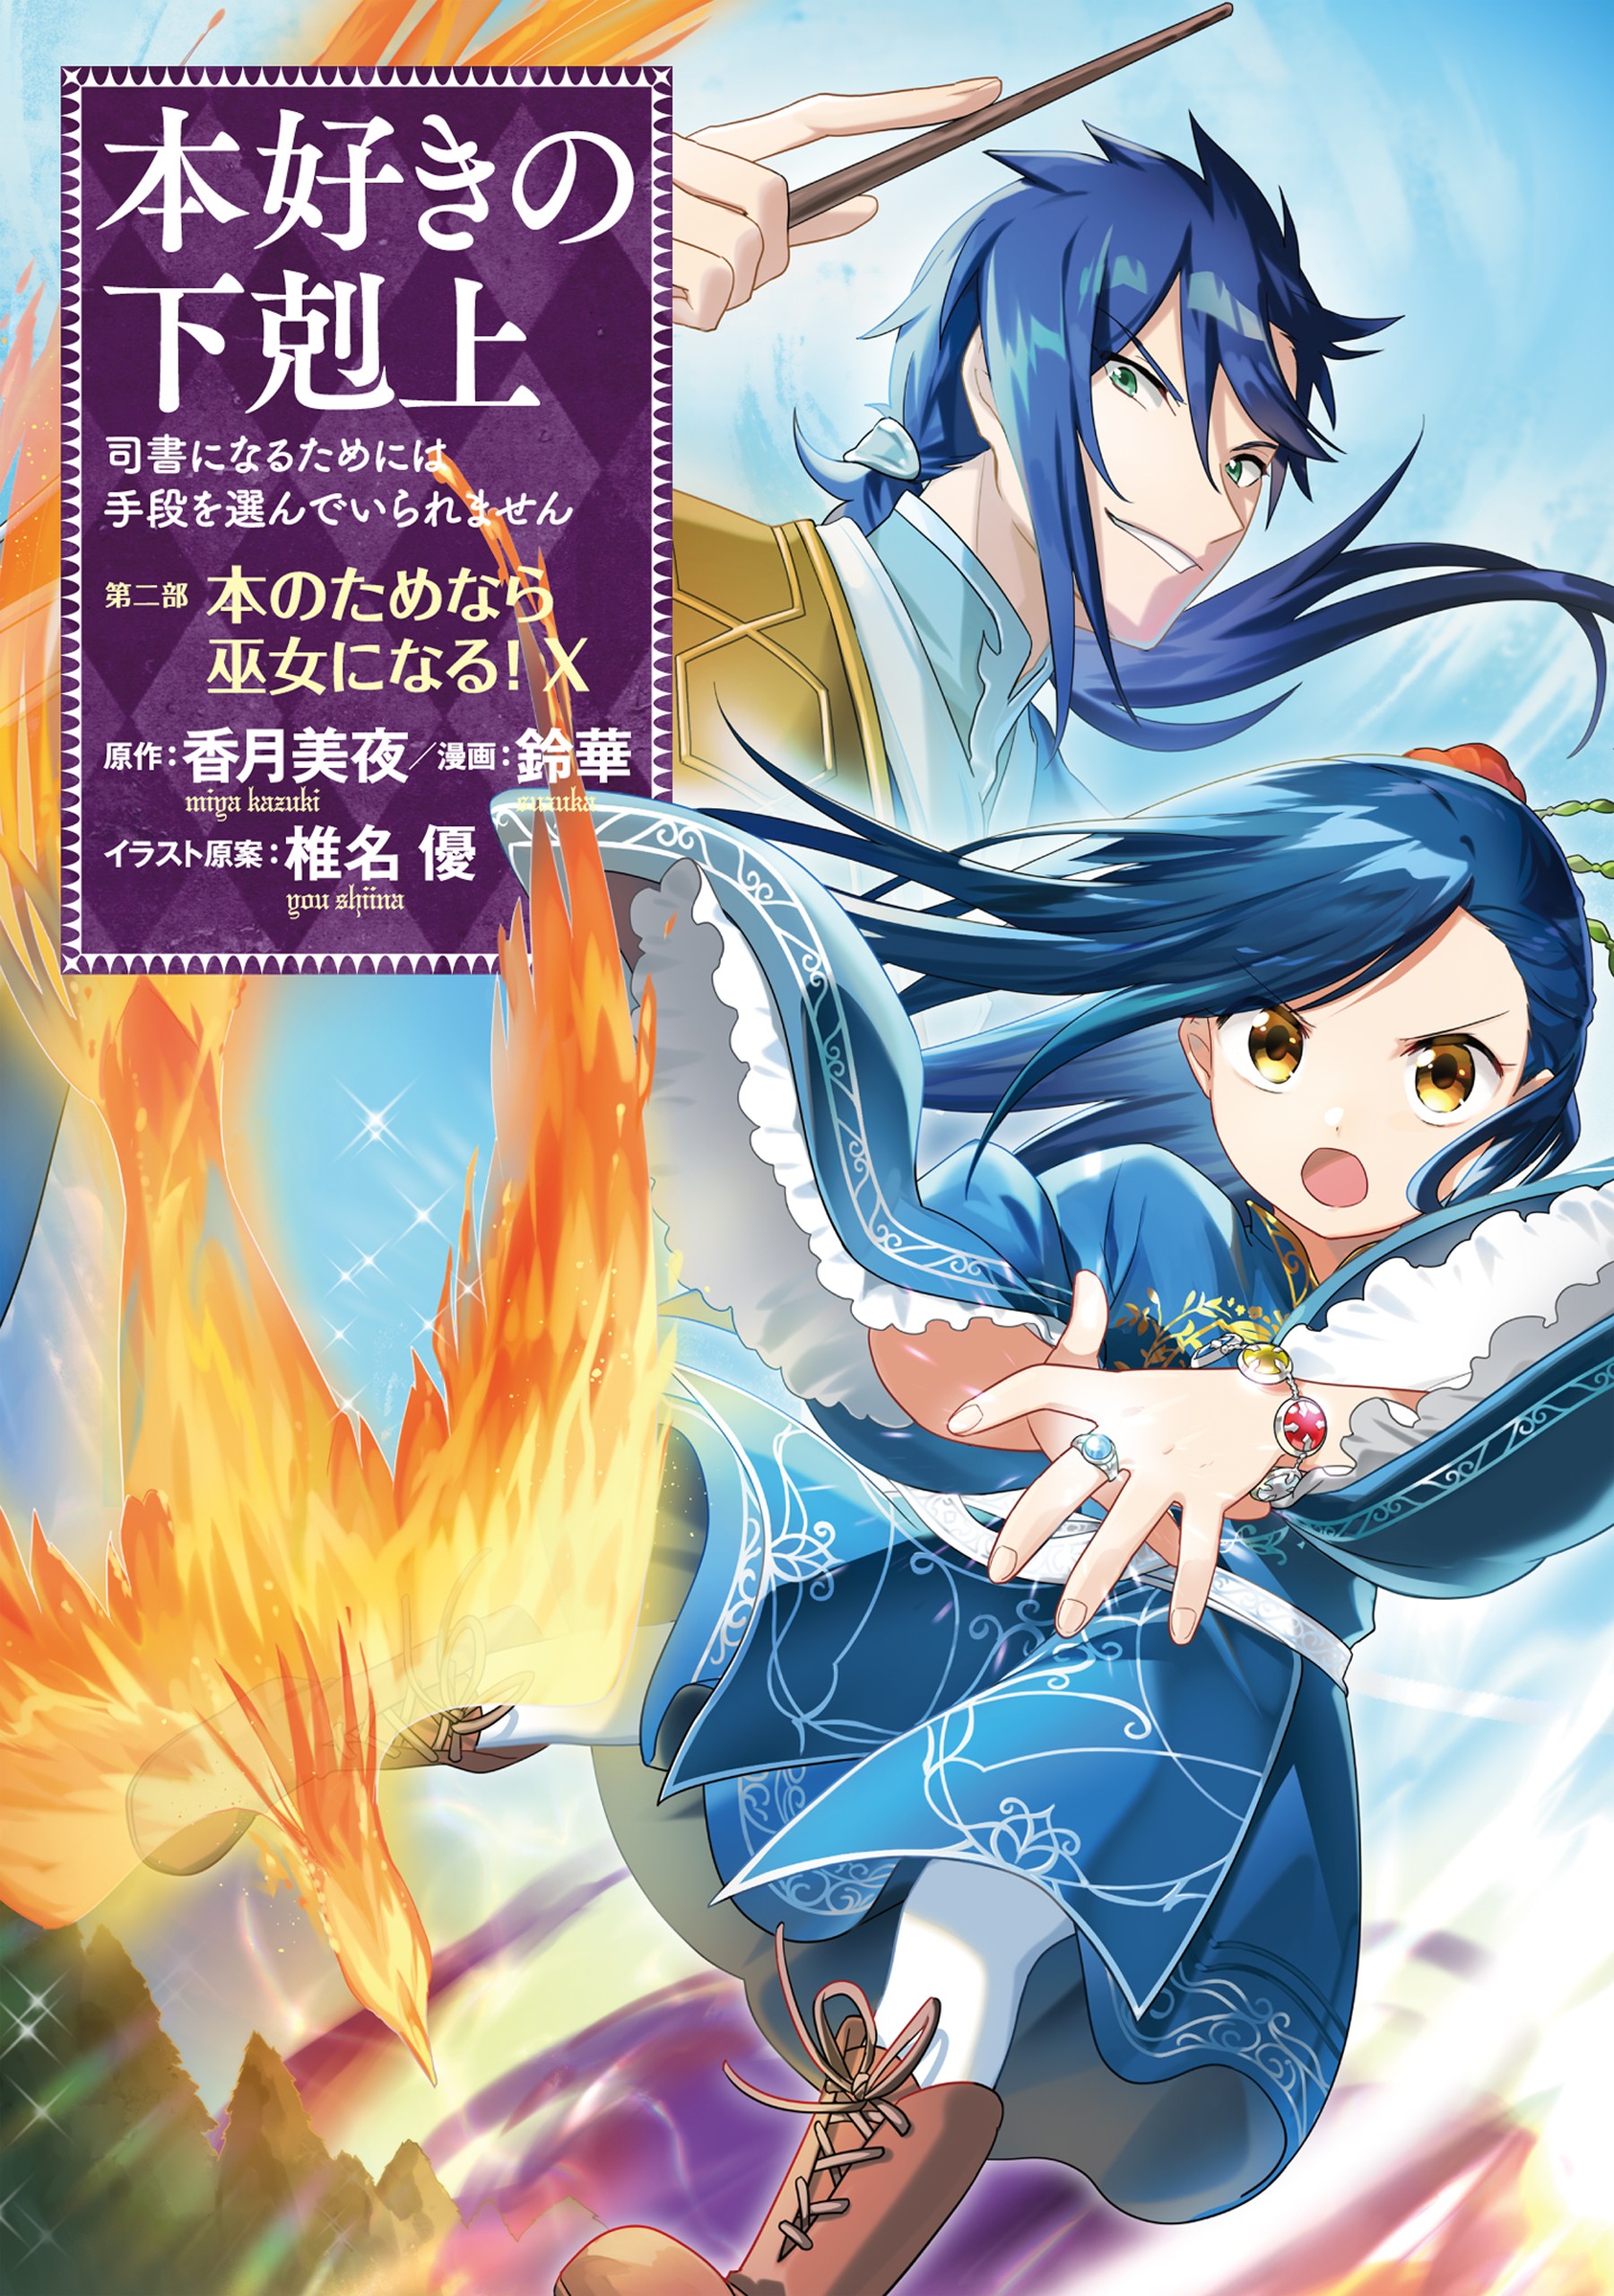 Manga and Anime Recommendation – Honzuki no Gekokujou: Shisho ni